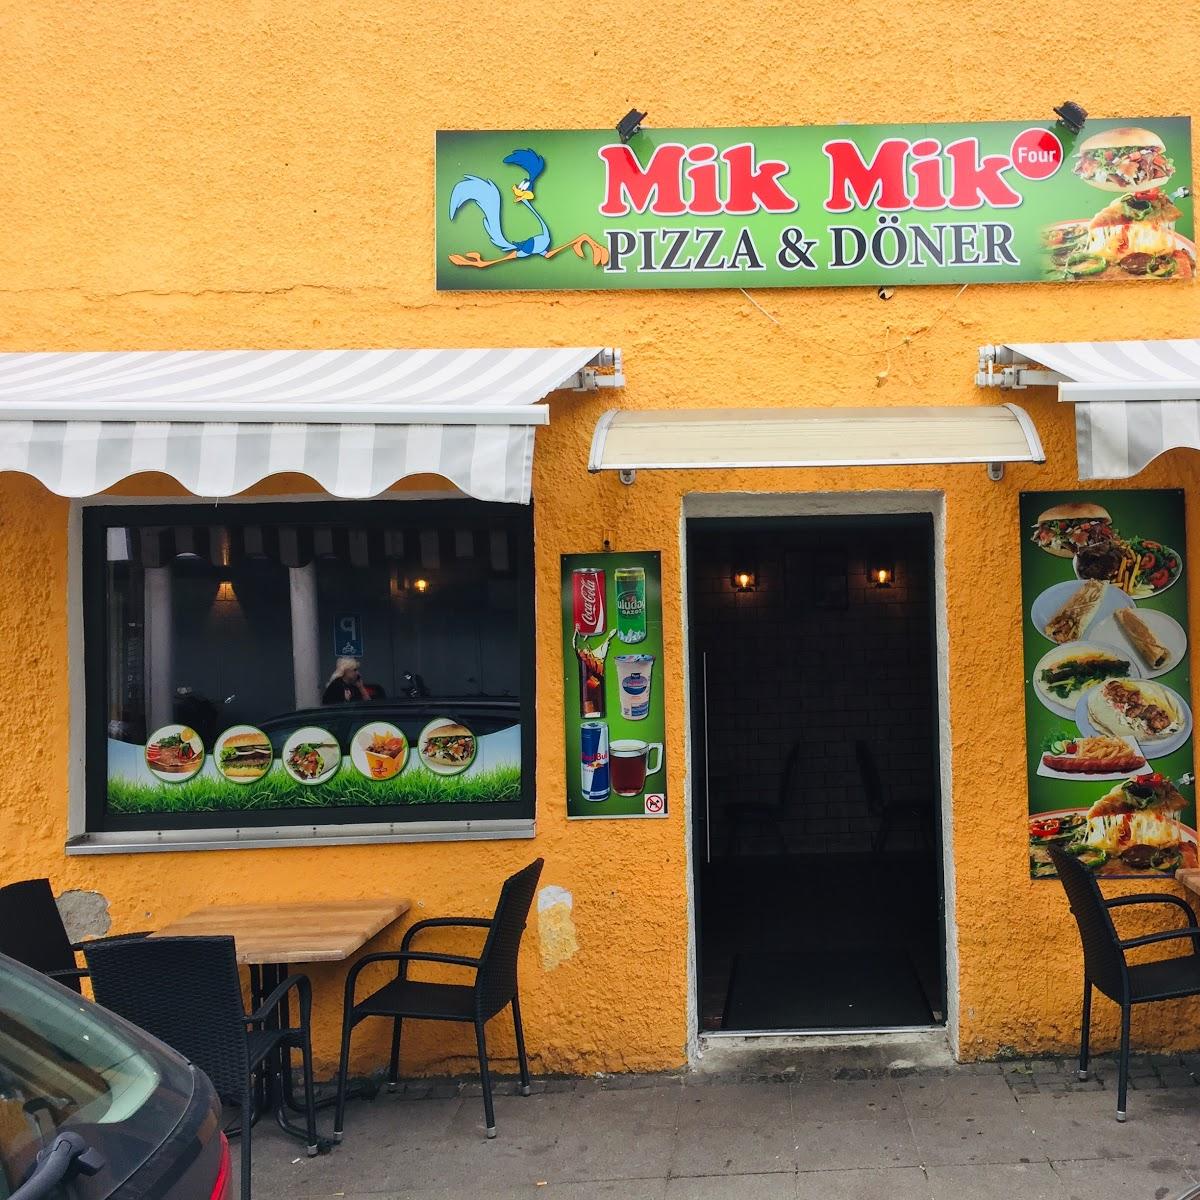 Restaurant "Mik Mik.Four" in Ingolstadt